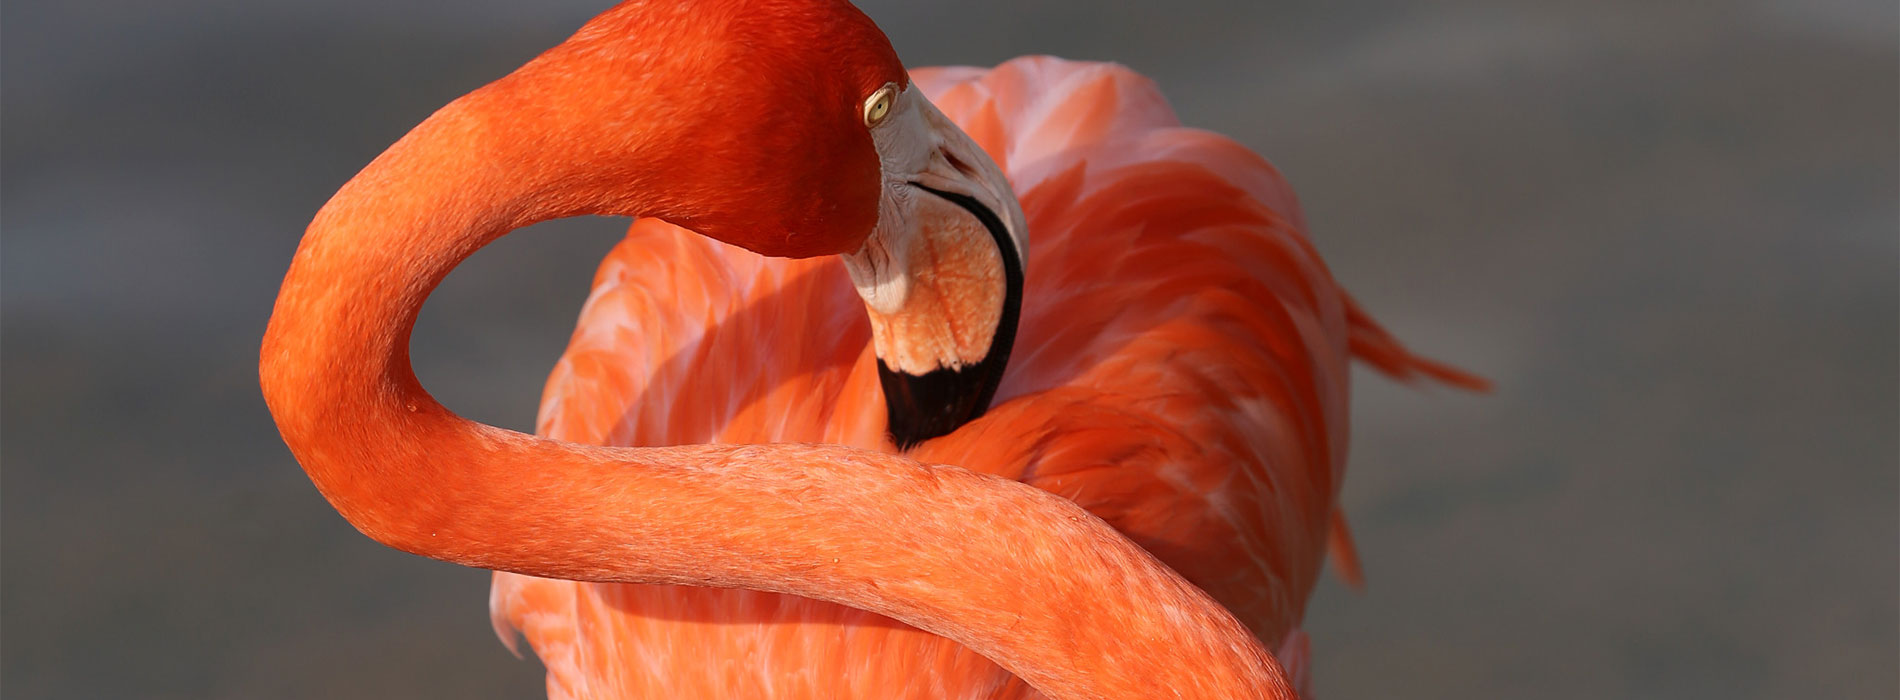 Flamingo preening